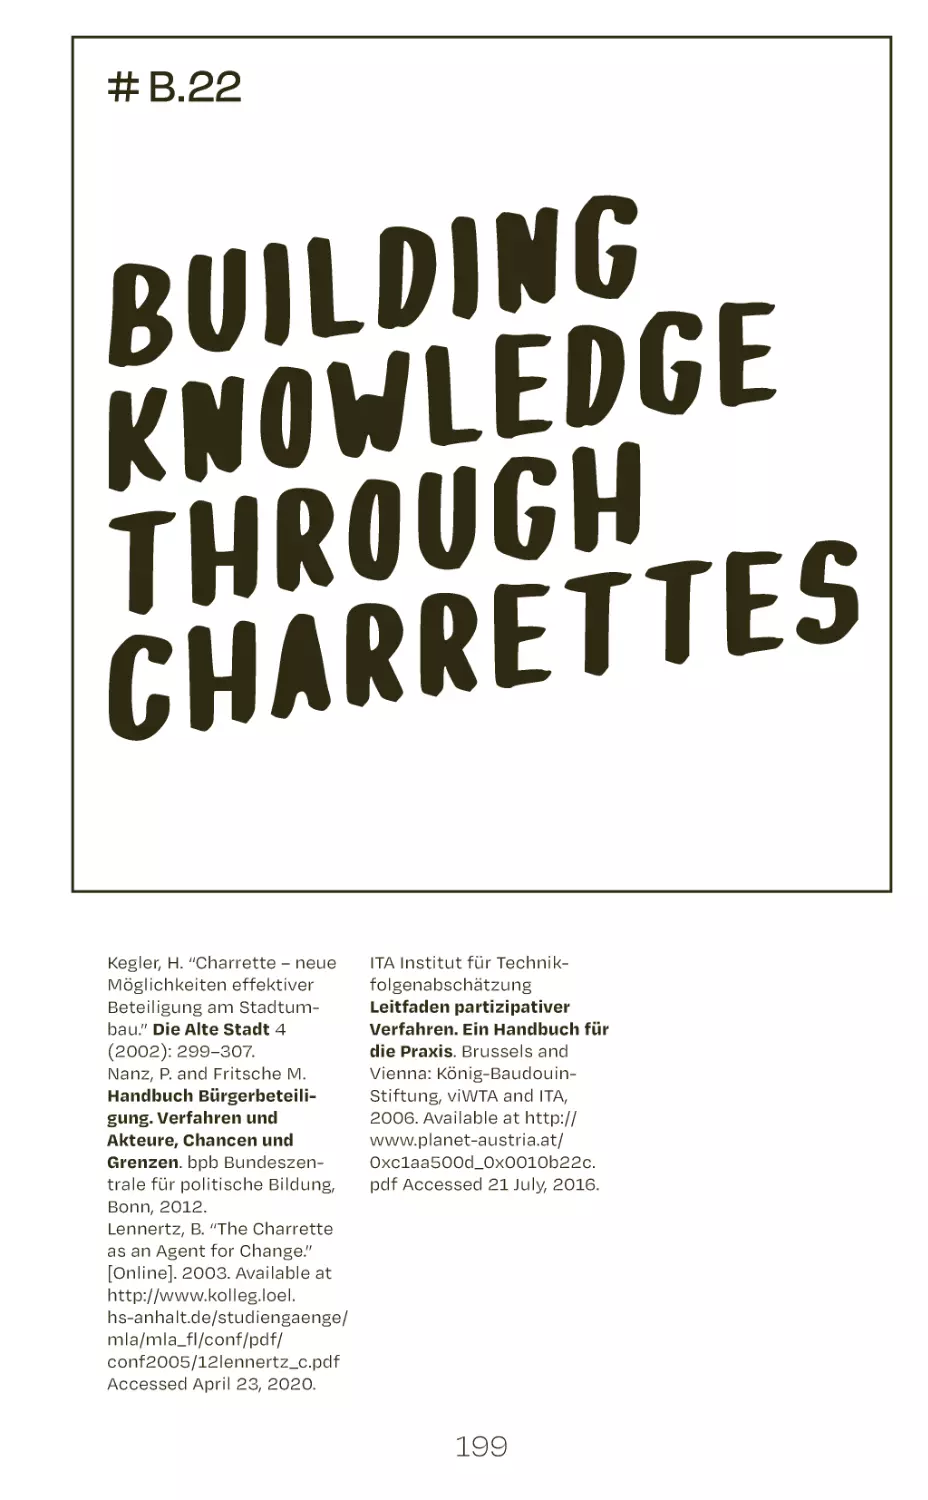 # B.22 building knowledge through charrettes